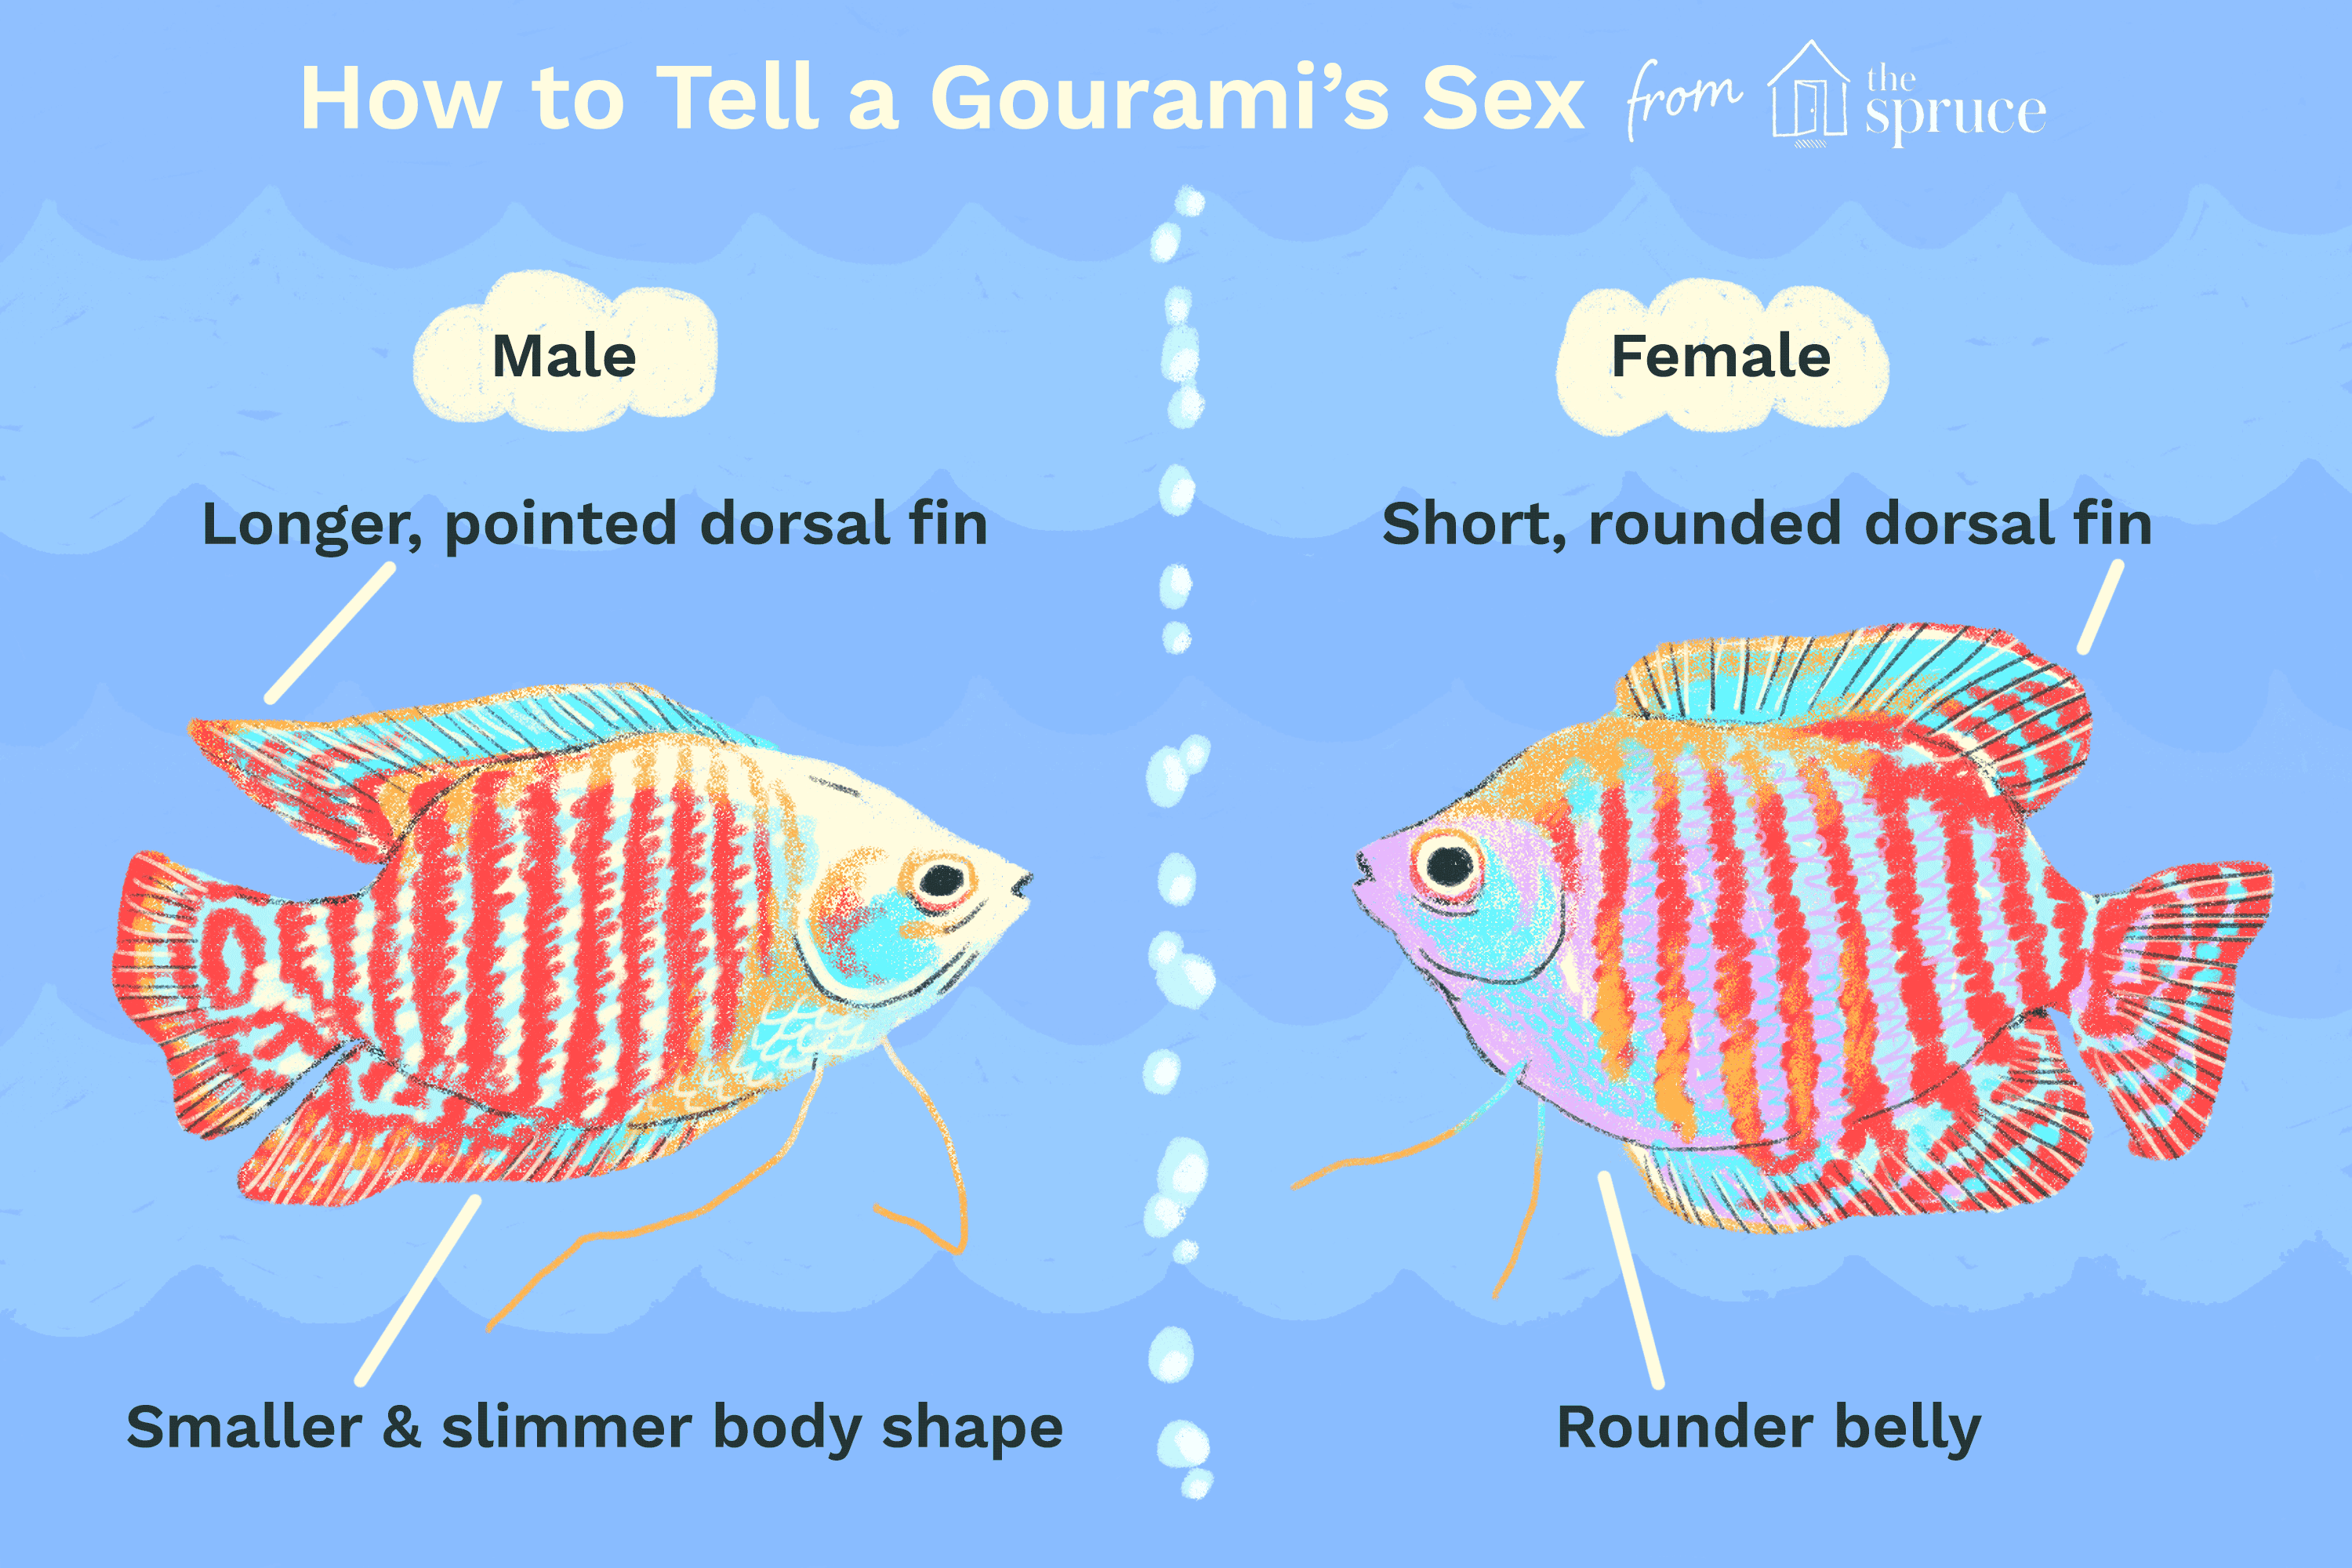 Come faccio a sapere se un Gourami è maschio o femmina?